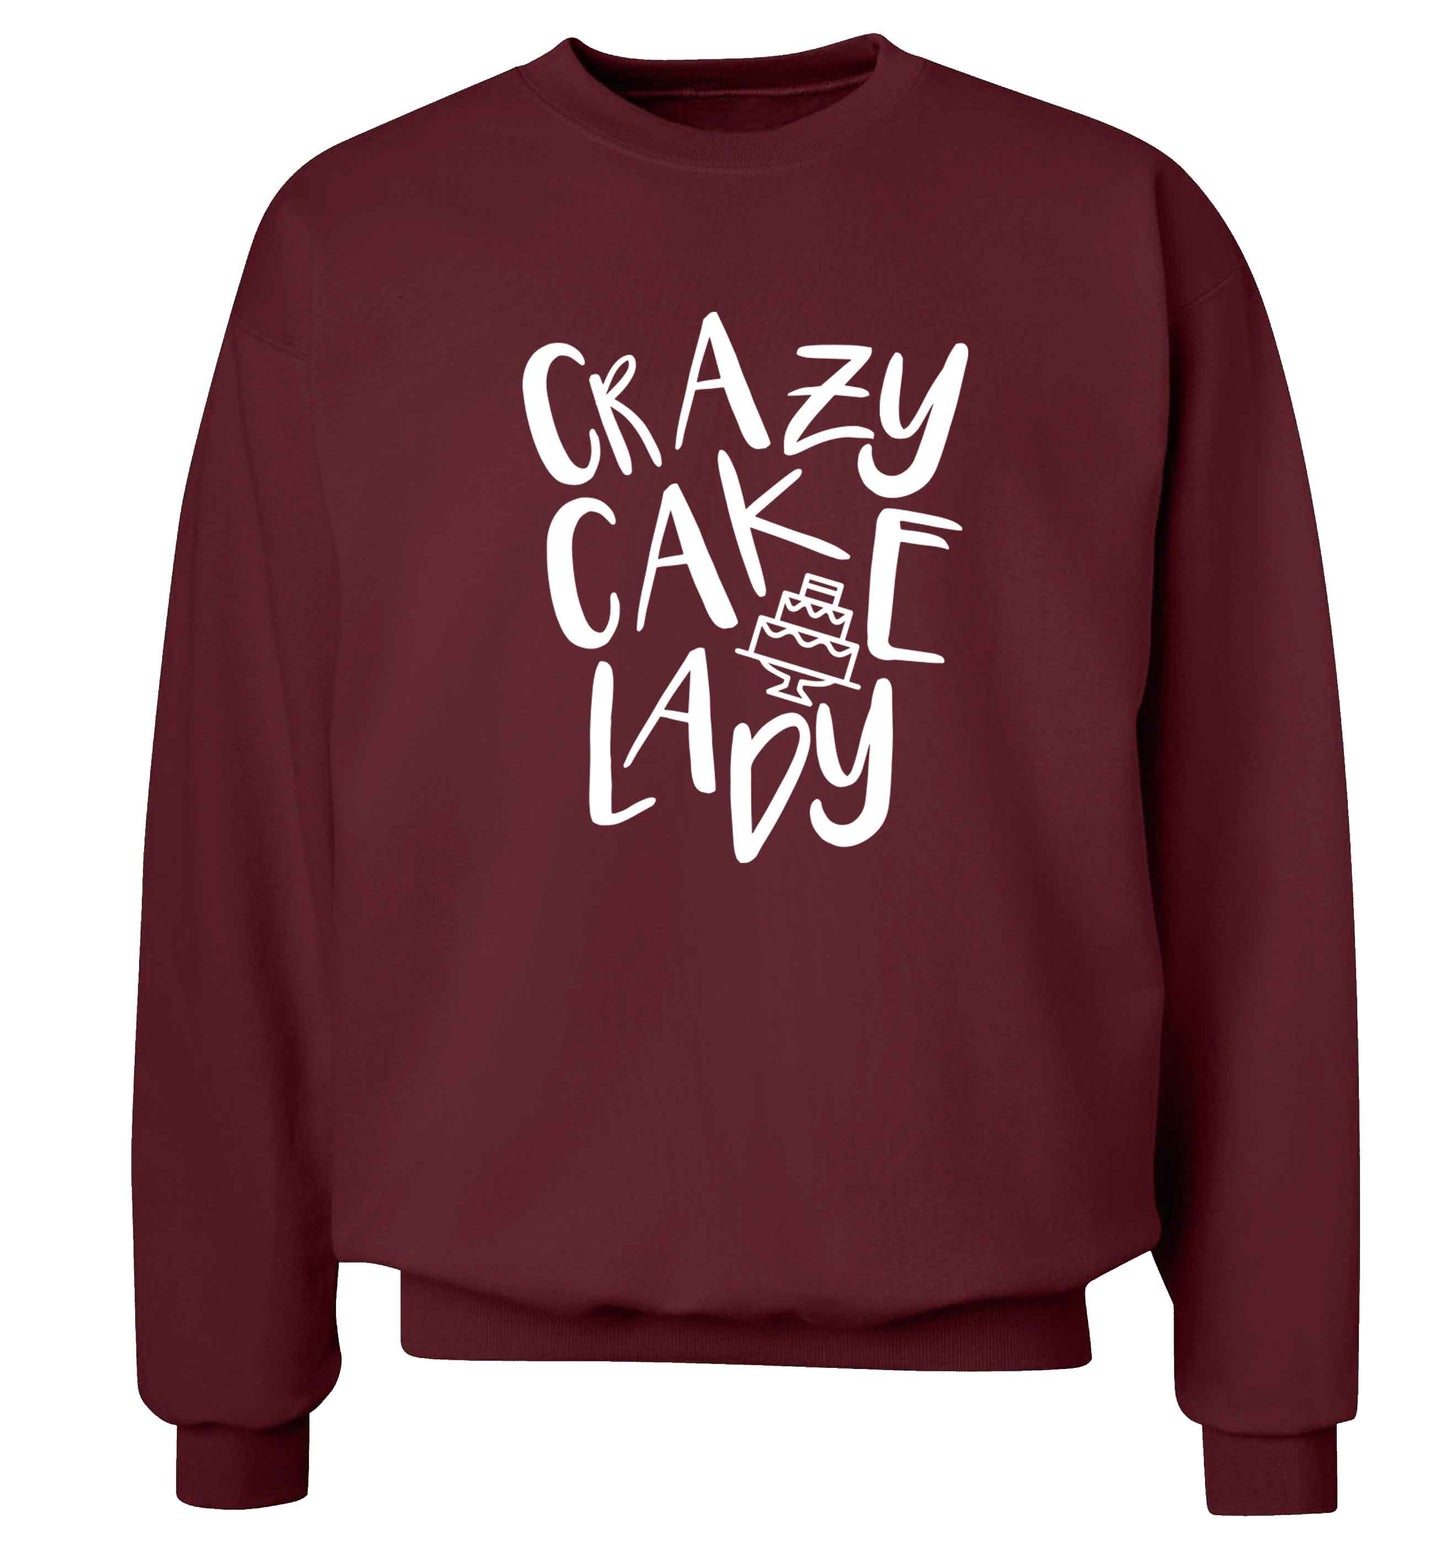 Crazy cake lady Adult's unisex maroon Sweater 2XL